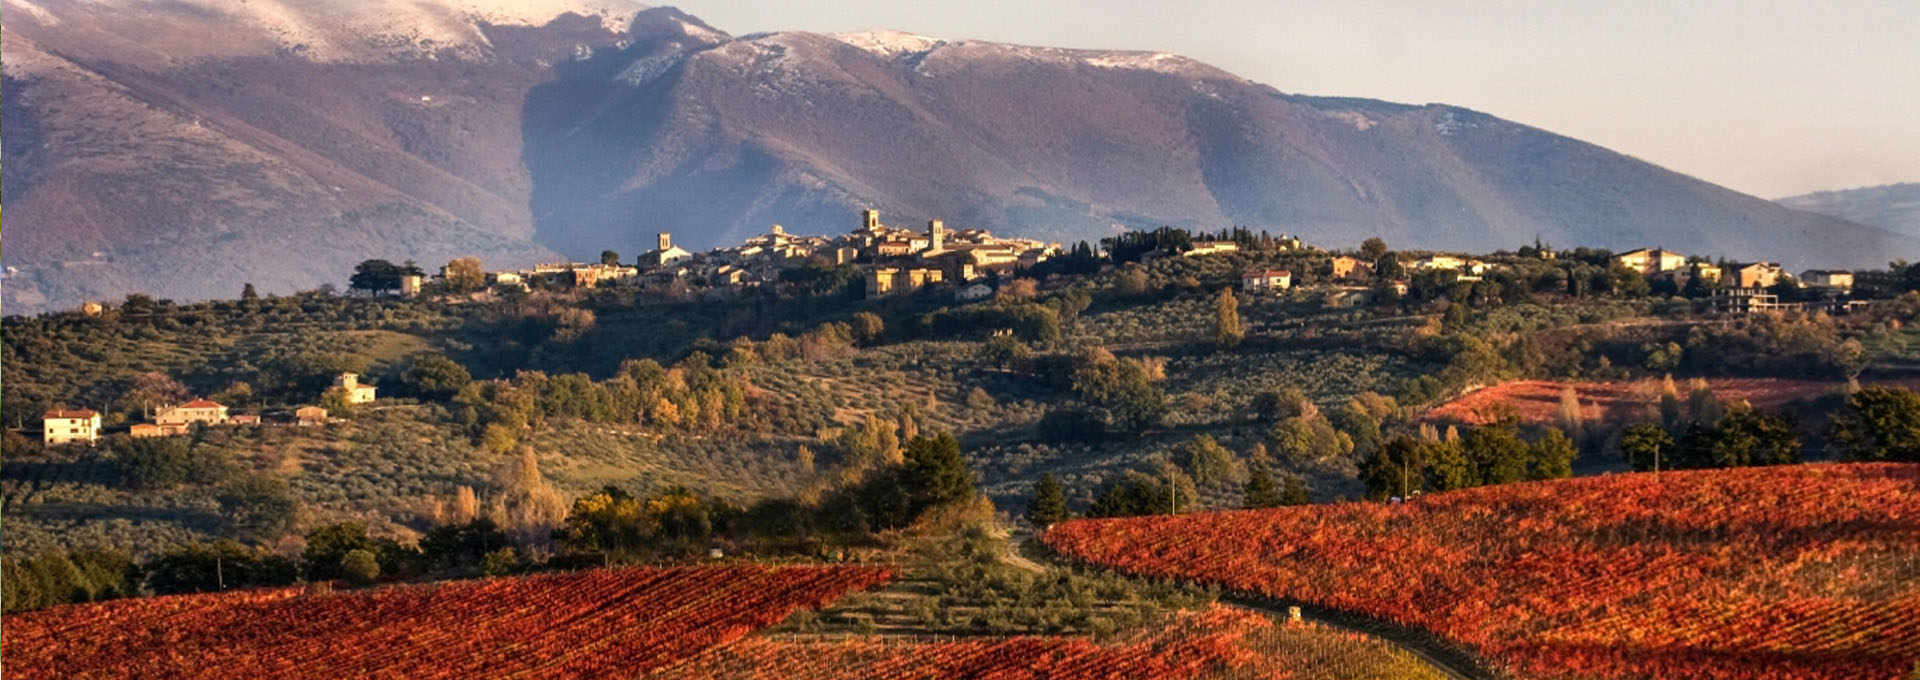 Montefalco, province of Perugia, Umbria